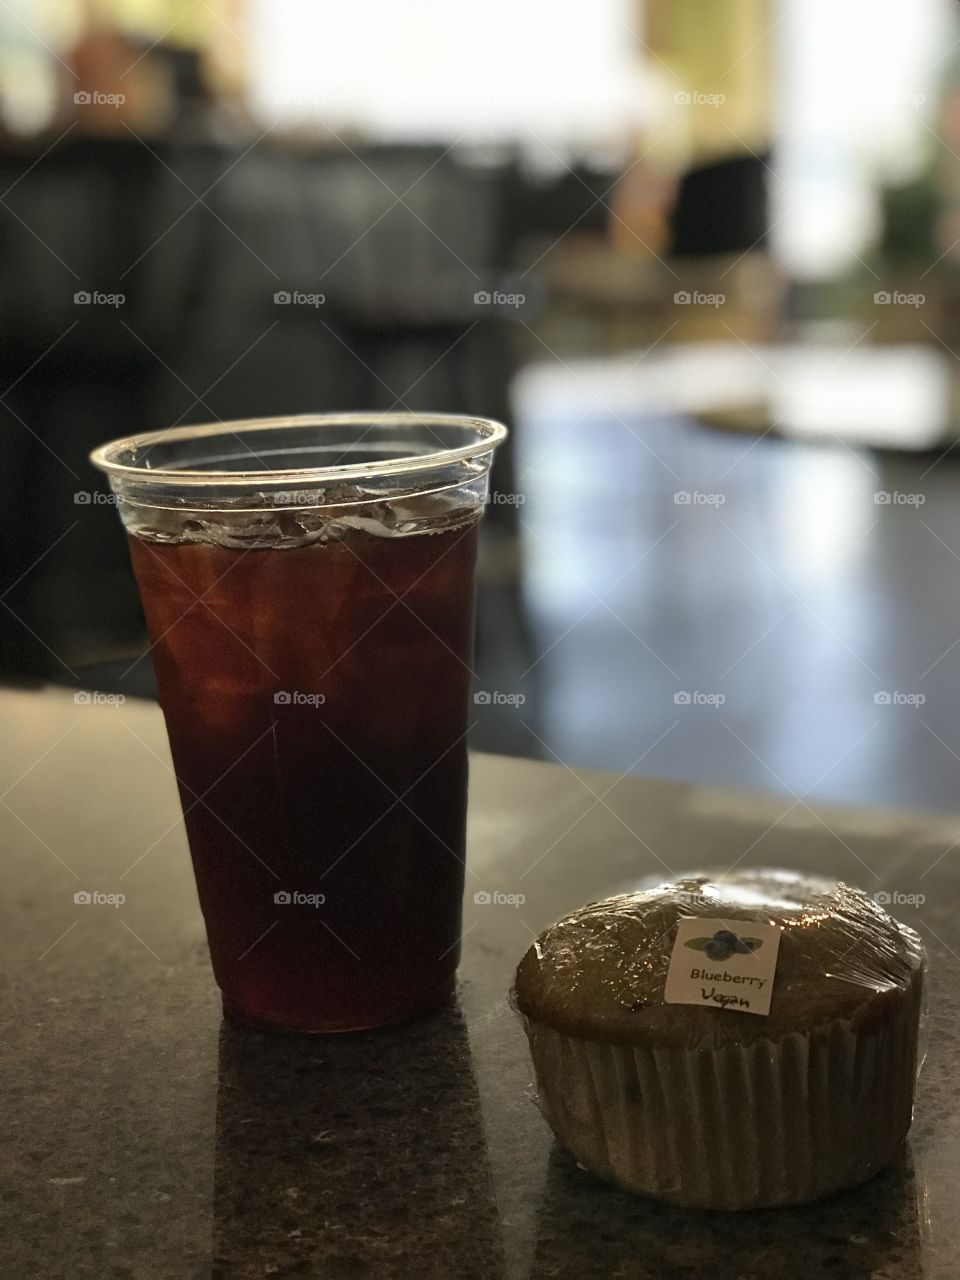 Iced Coffee and Vegan Muffin